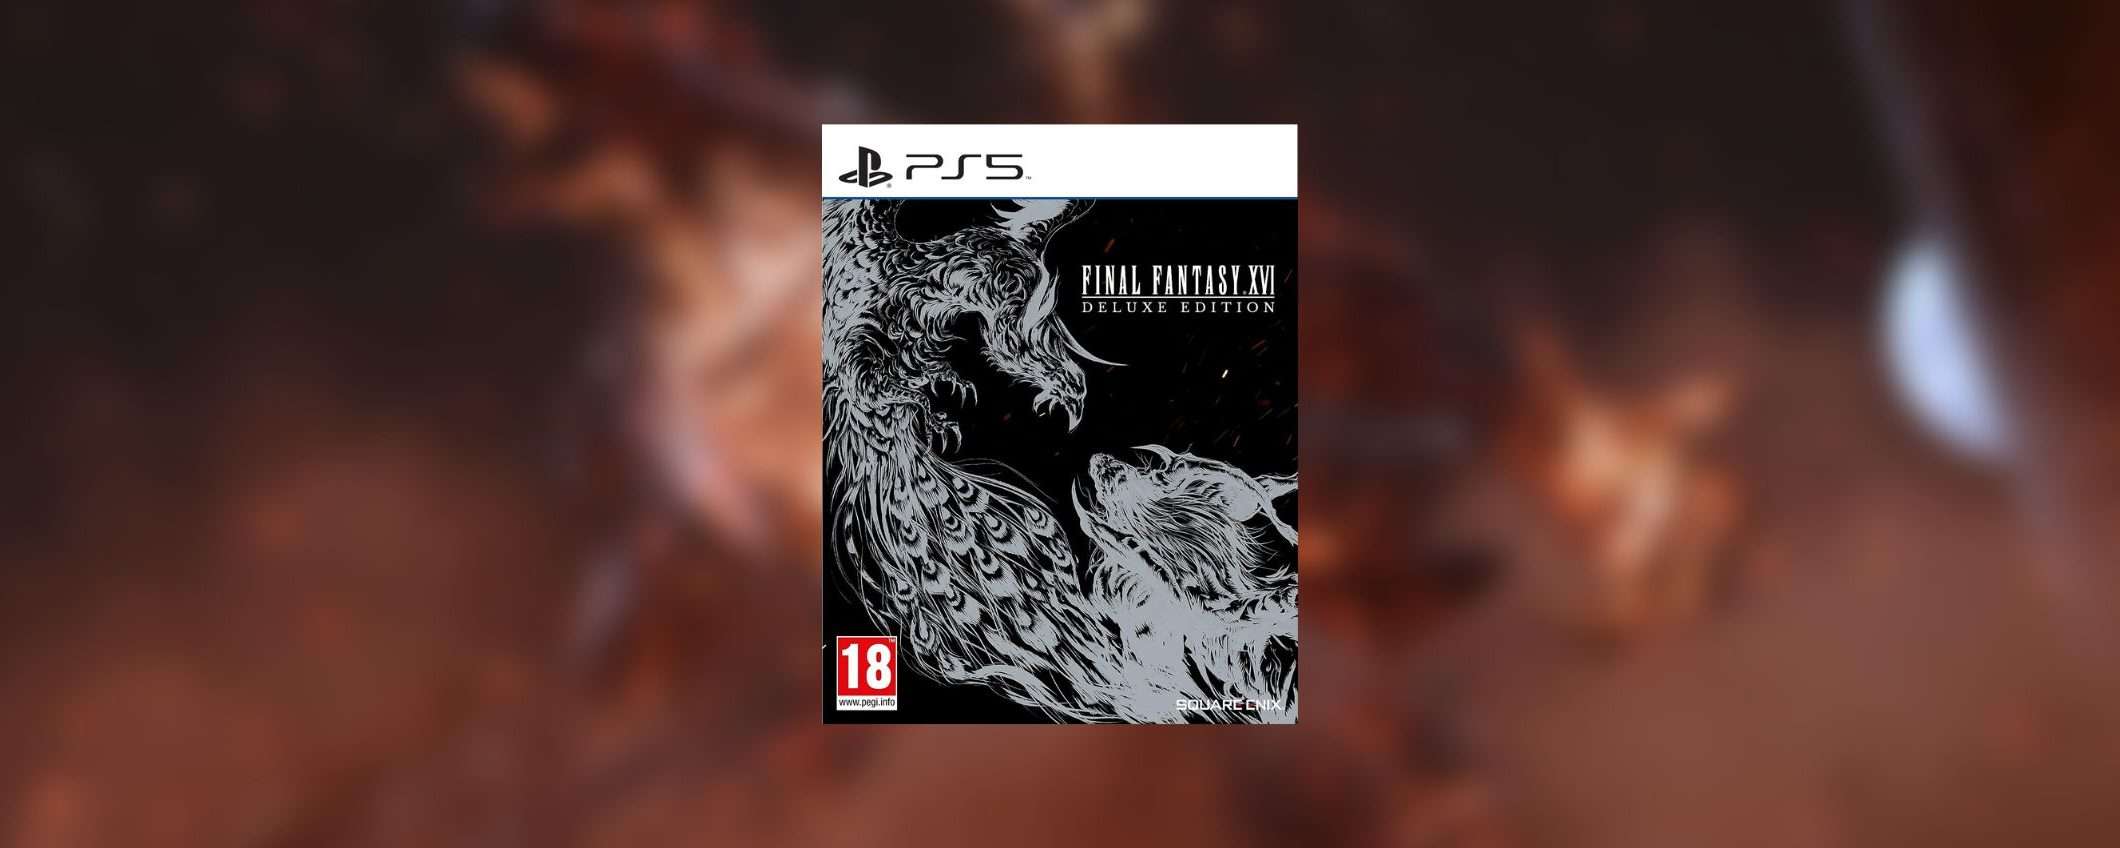 Final Fantasy 16: la Deluxe Edition al MINIMO STORICO su Amazon (-18%)